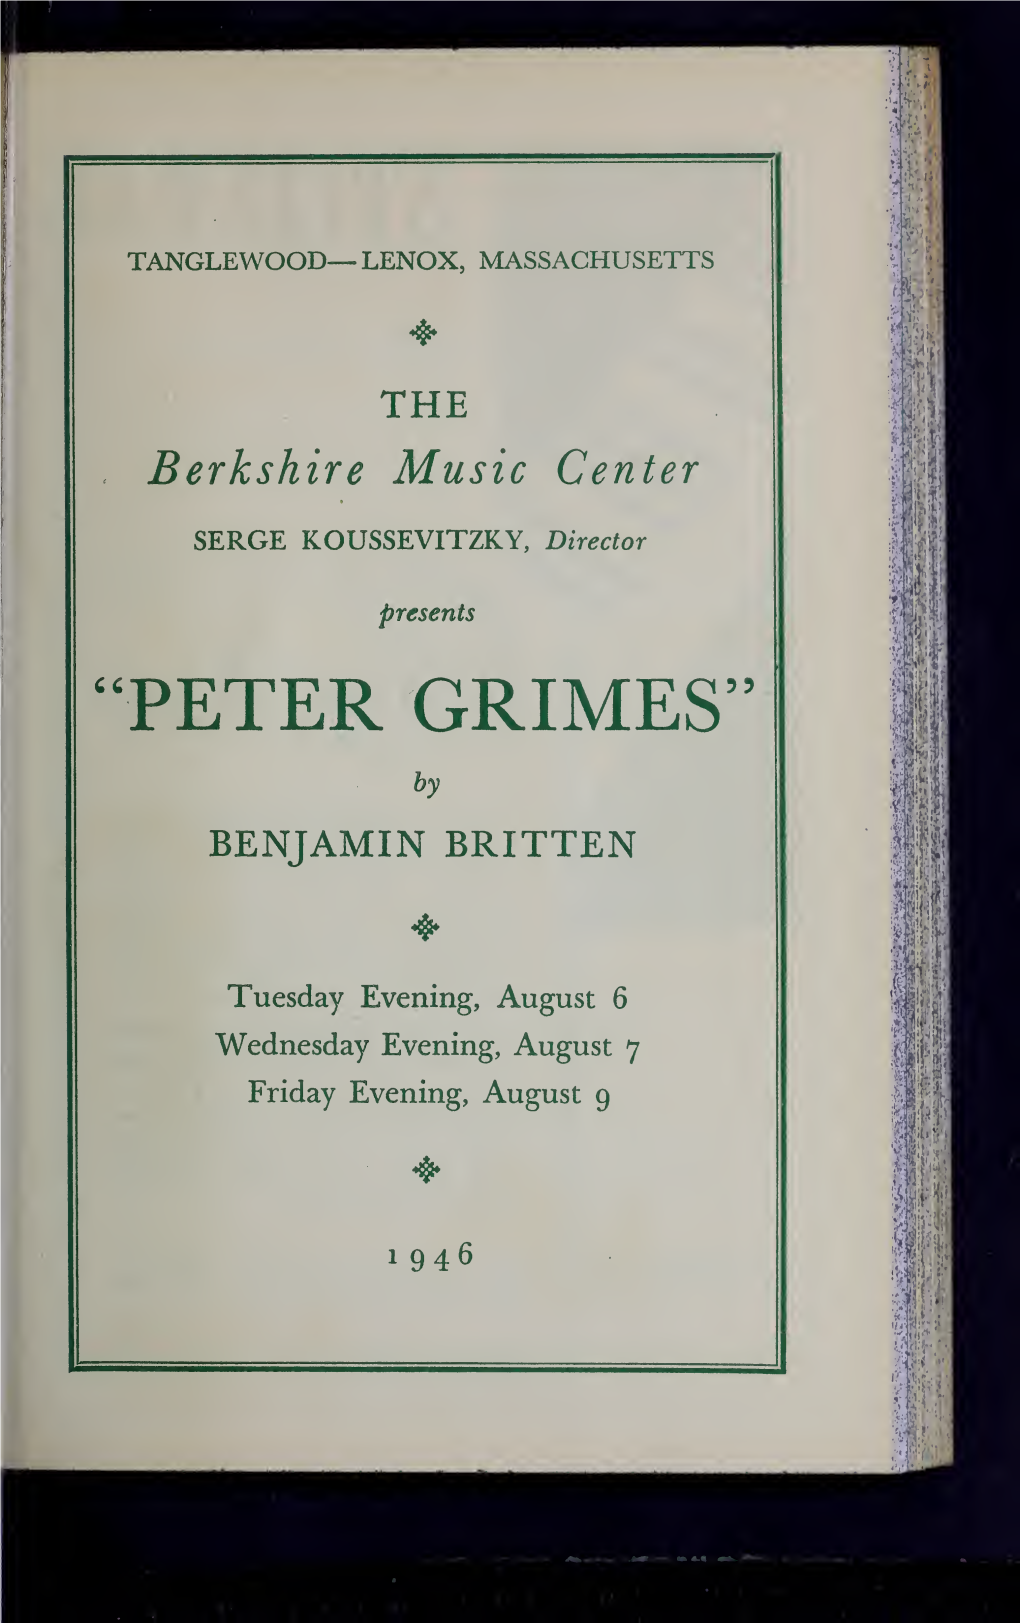 Boston Symphony Orchestra Concert Programs, Summer, 1946